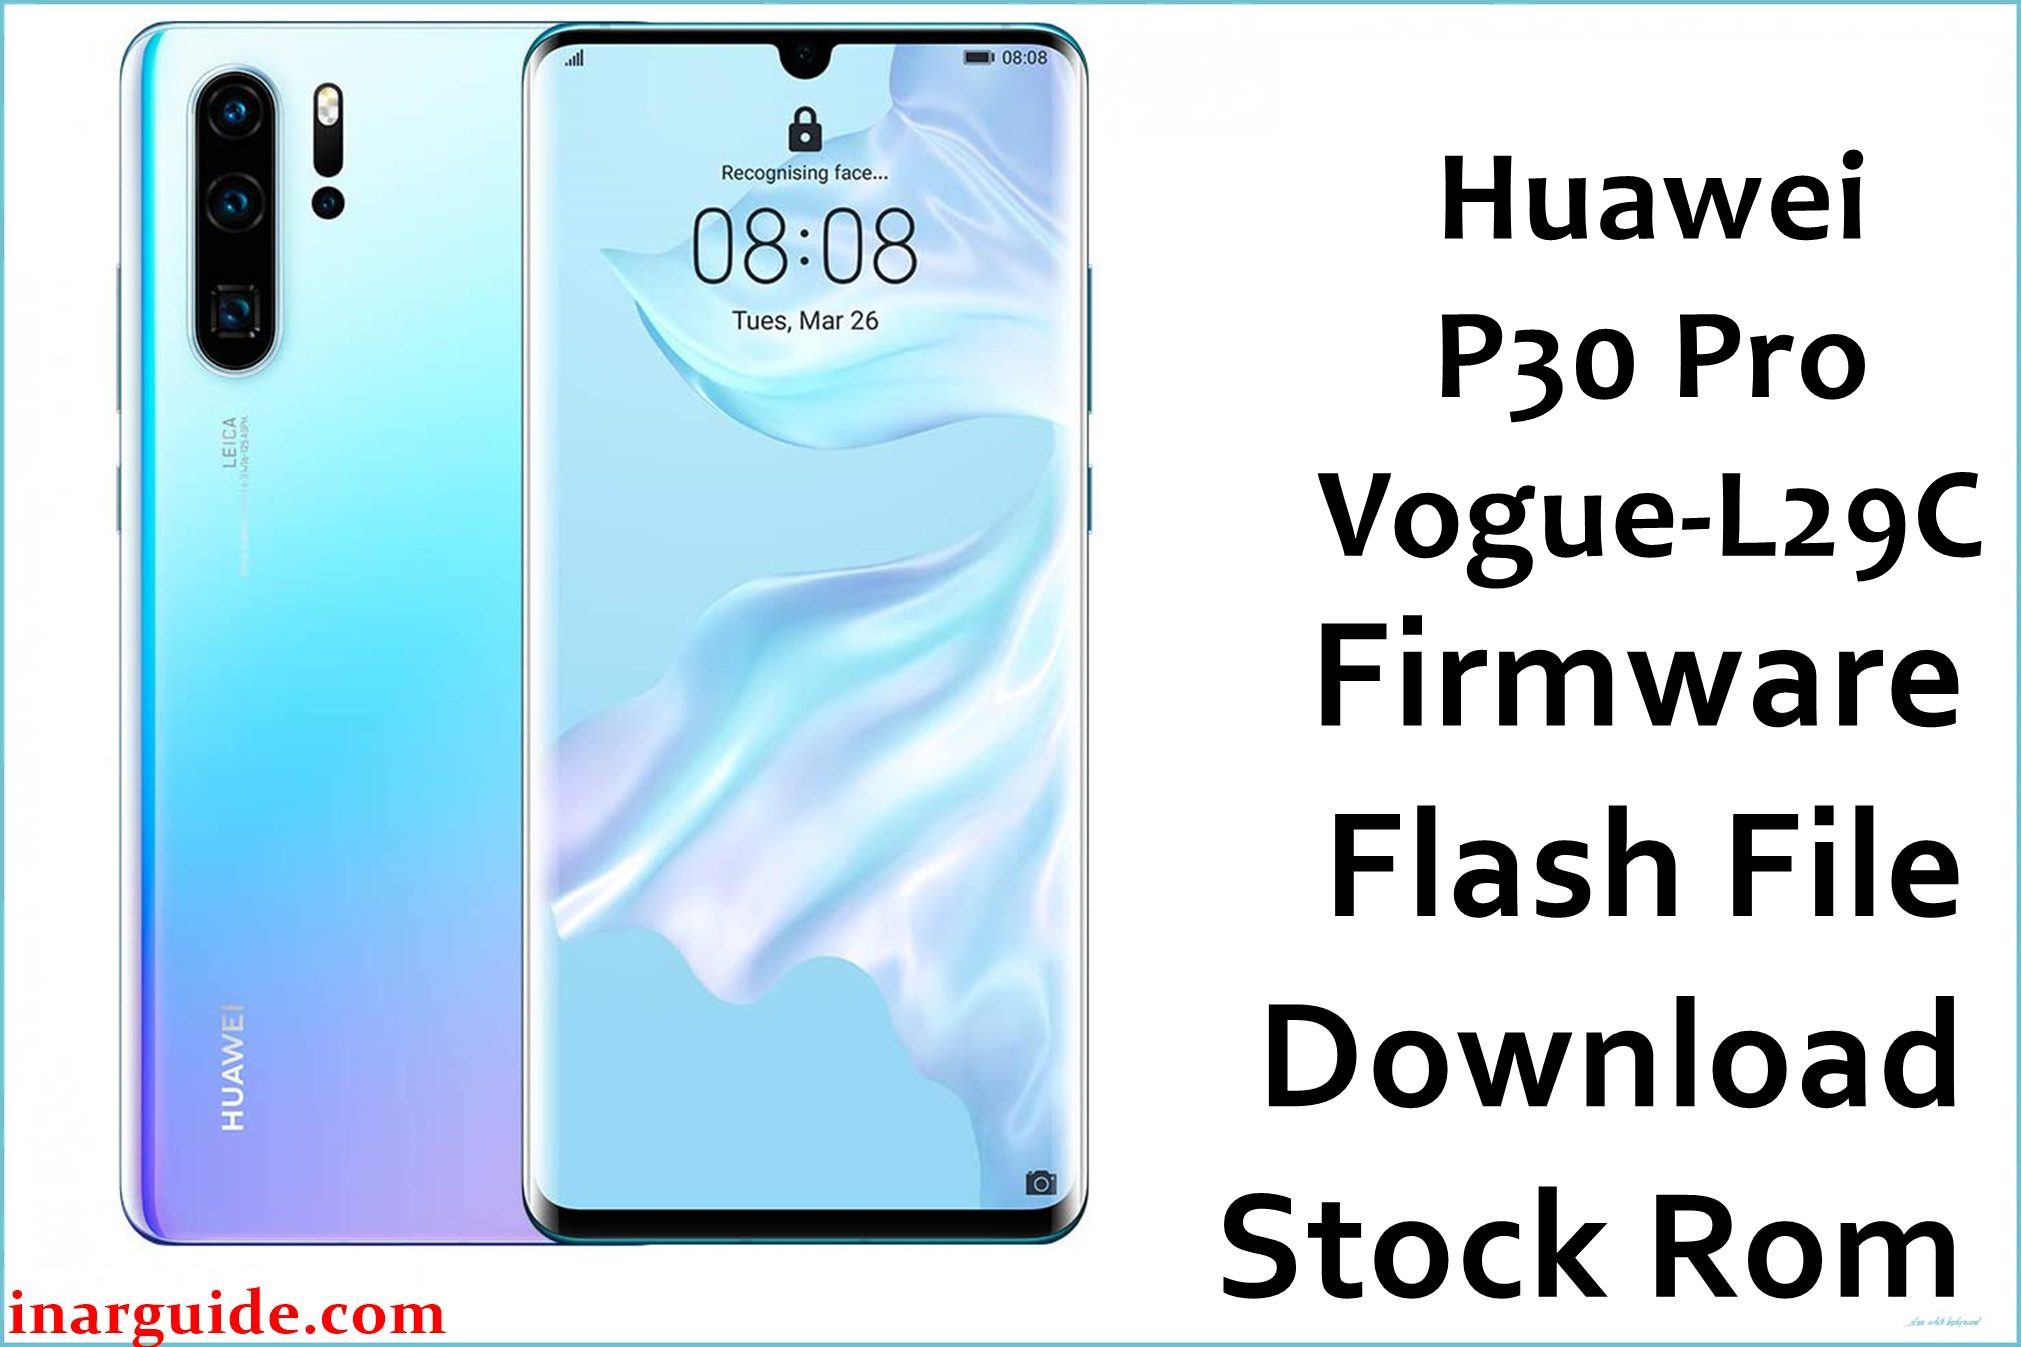 Huawei P30 Pro Vogue L29C